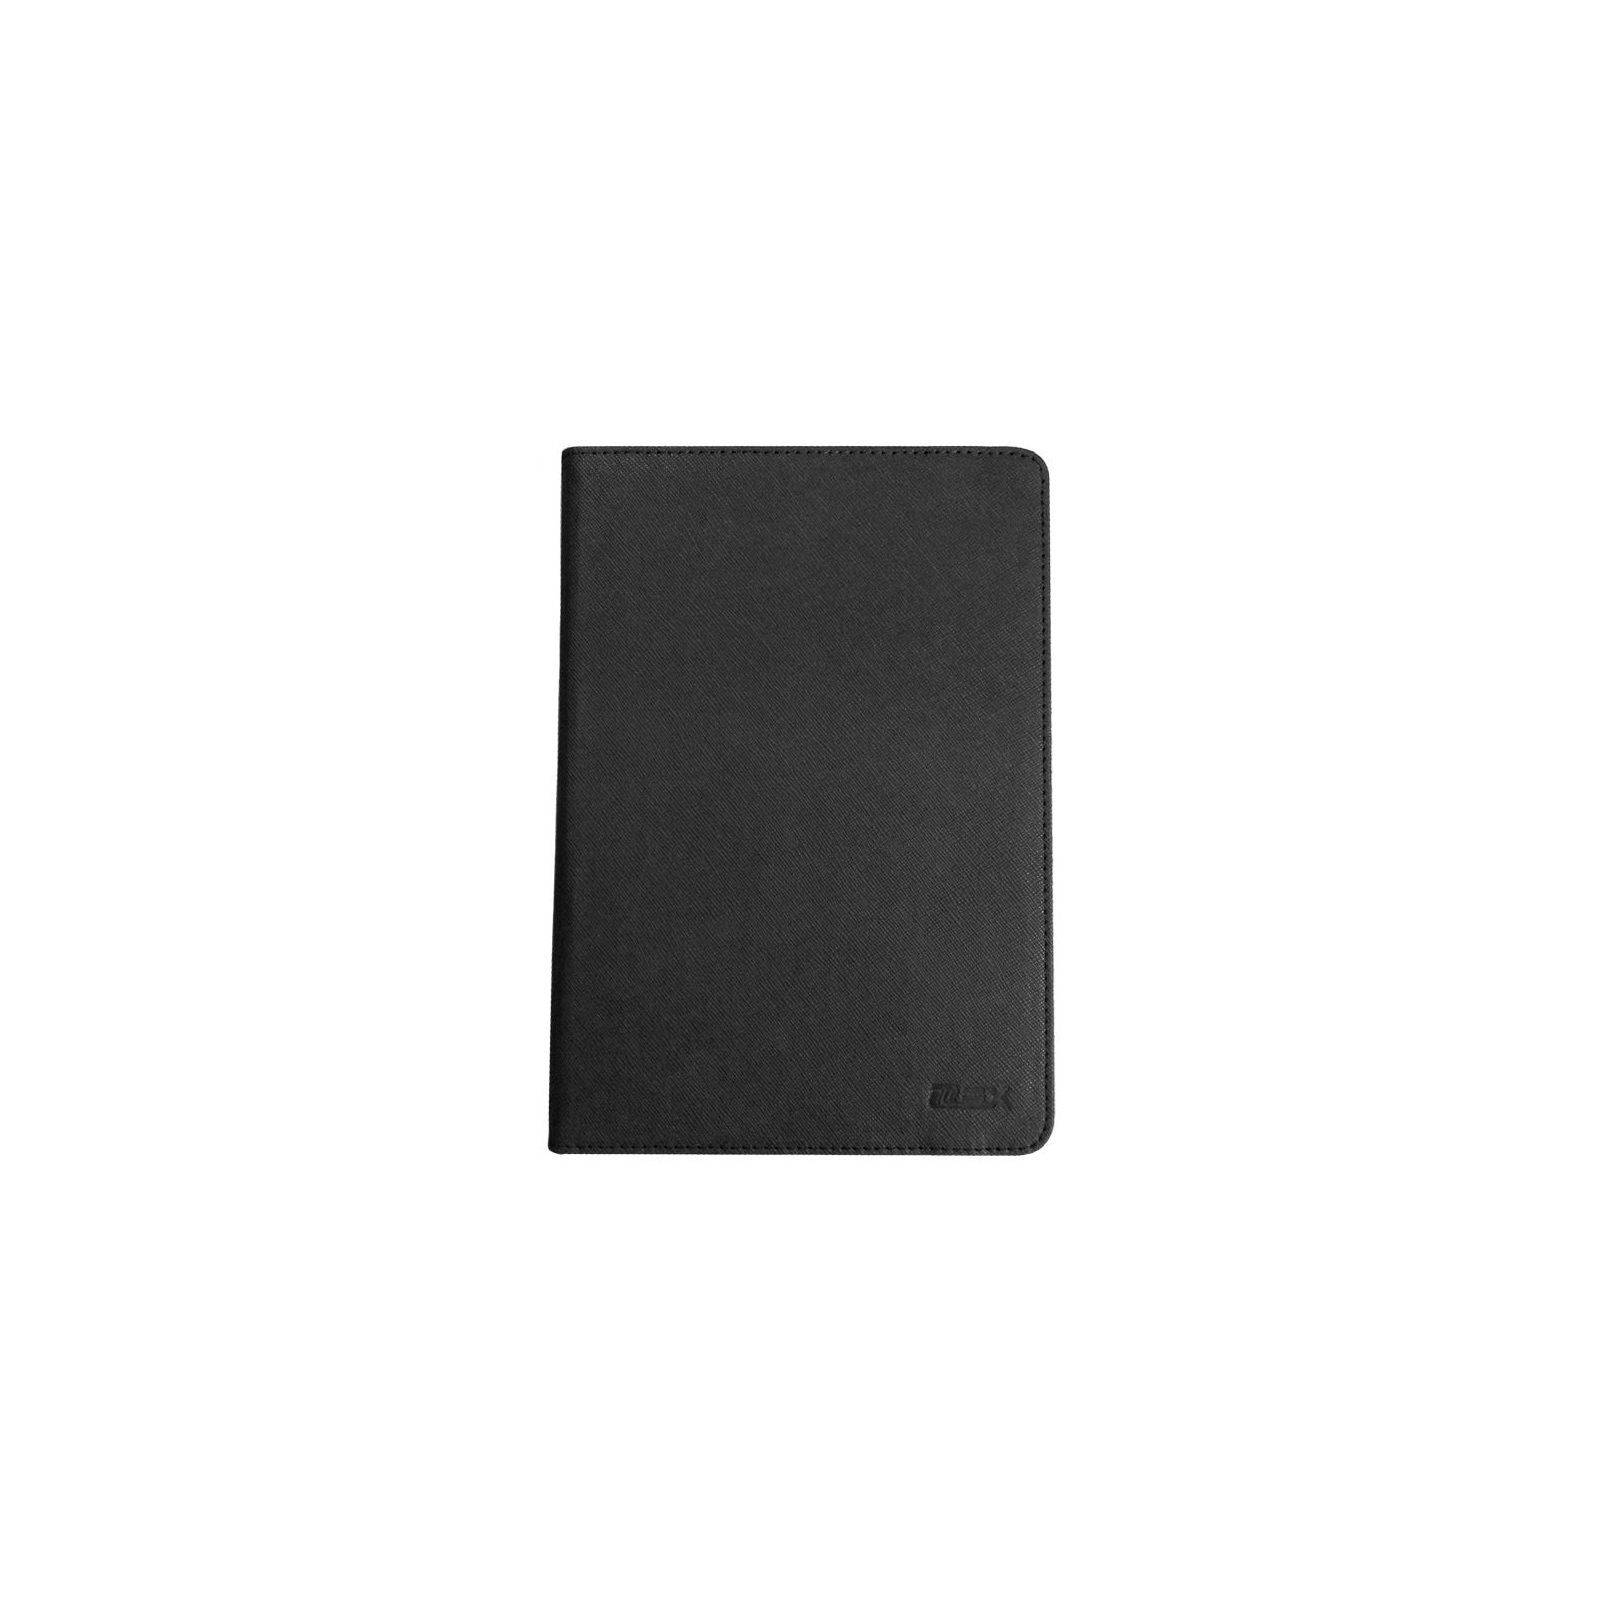 Чехол для планшета D-Lex 7 black 20.5*13.5*1.3 LXTC-4107-BK (4303)